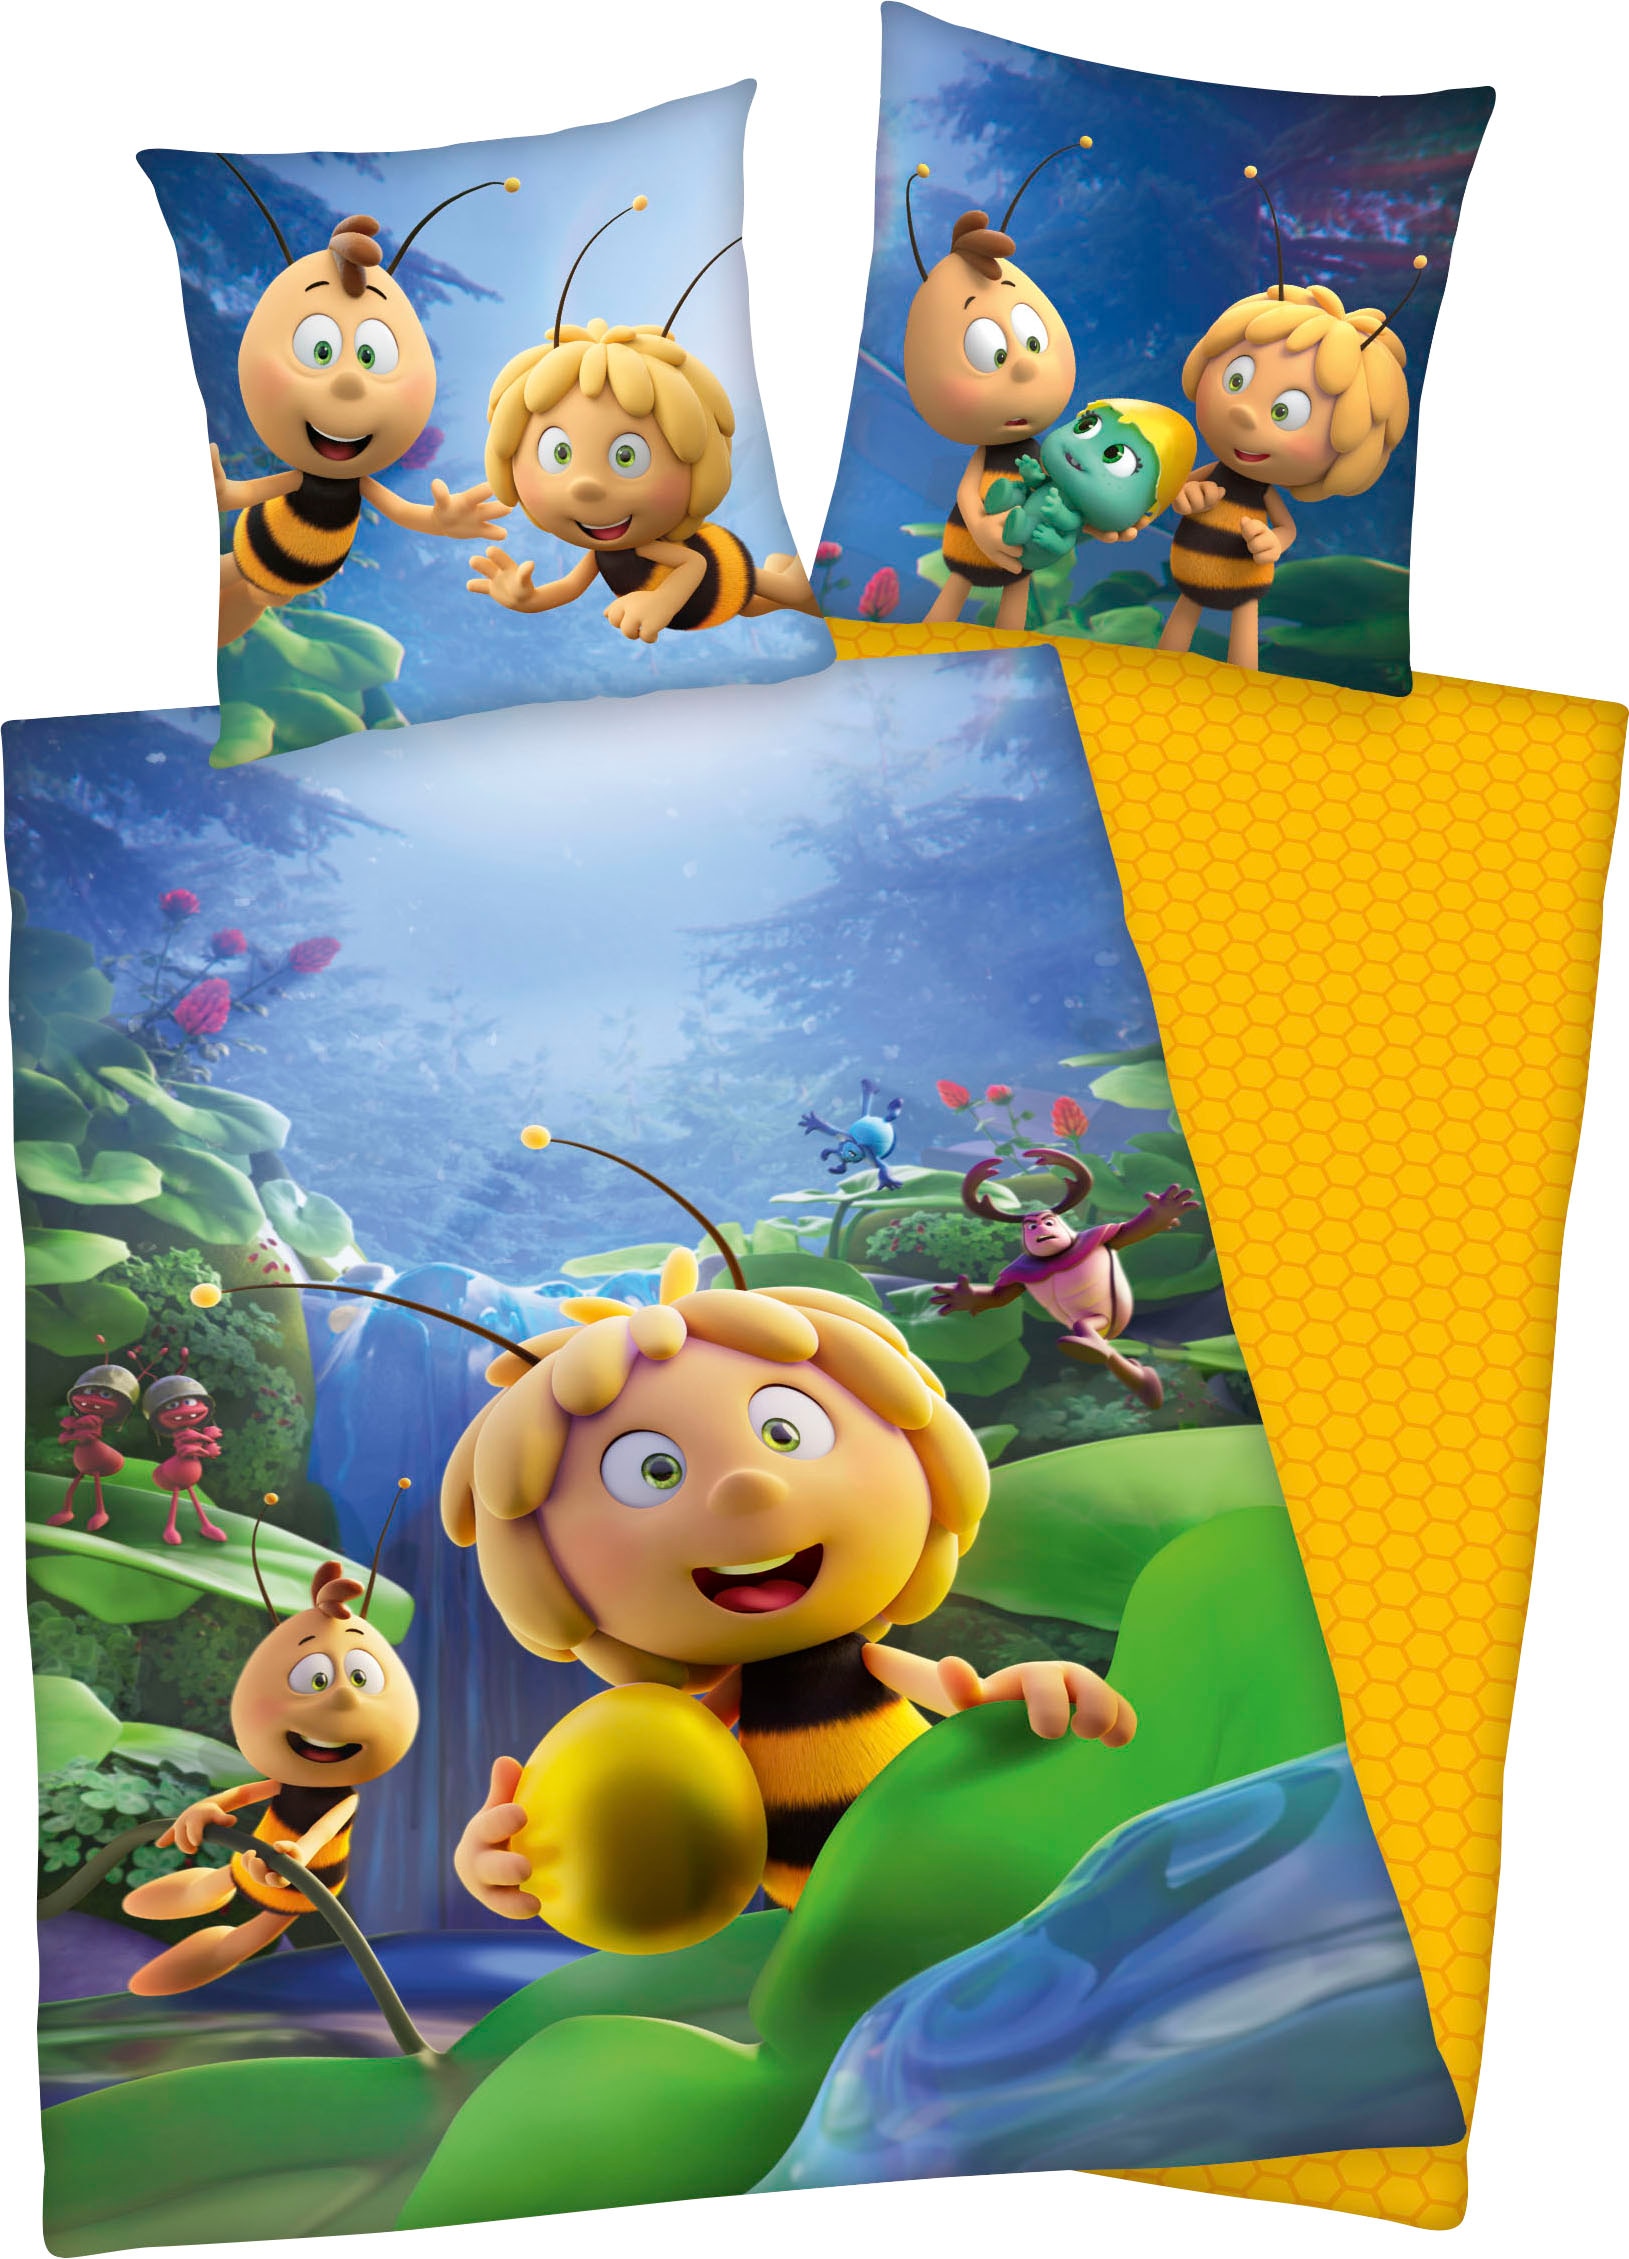 Die Biene Maja Kinderbettwäsche »Biene Maja«, mit tollem Biene Maja und Willi Motiv